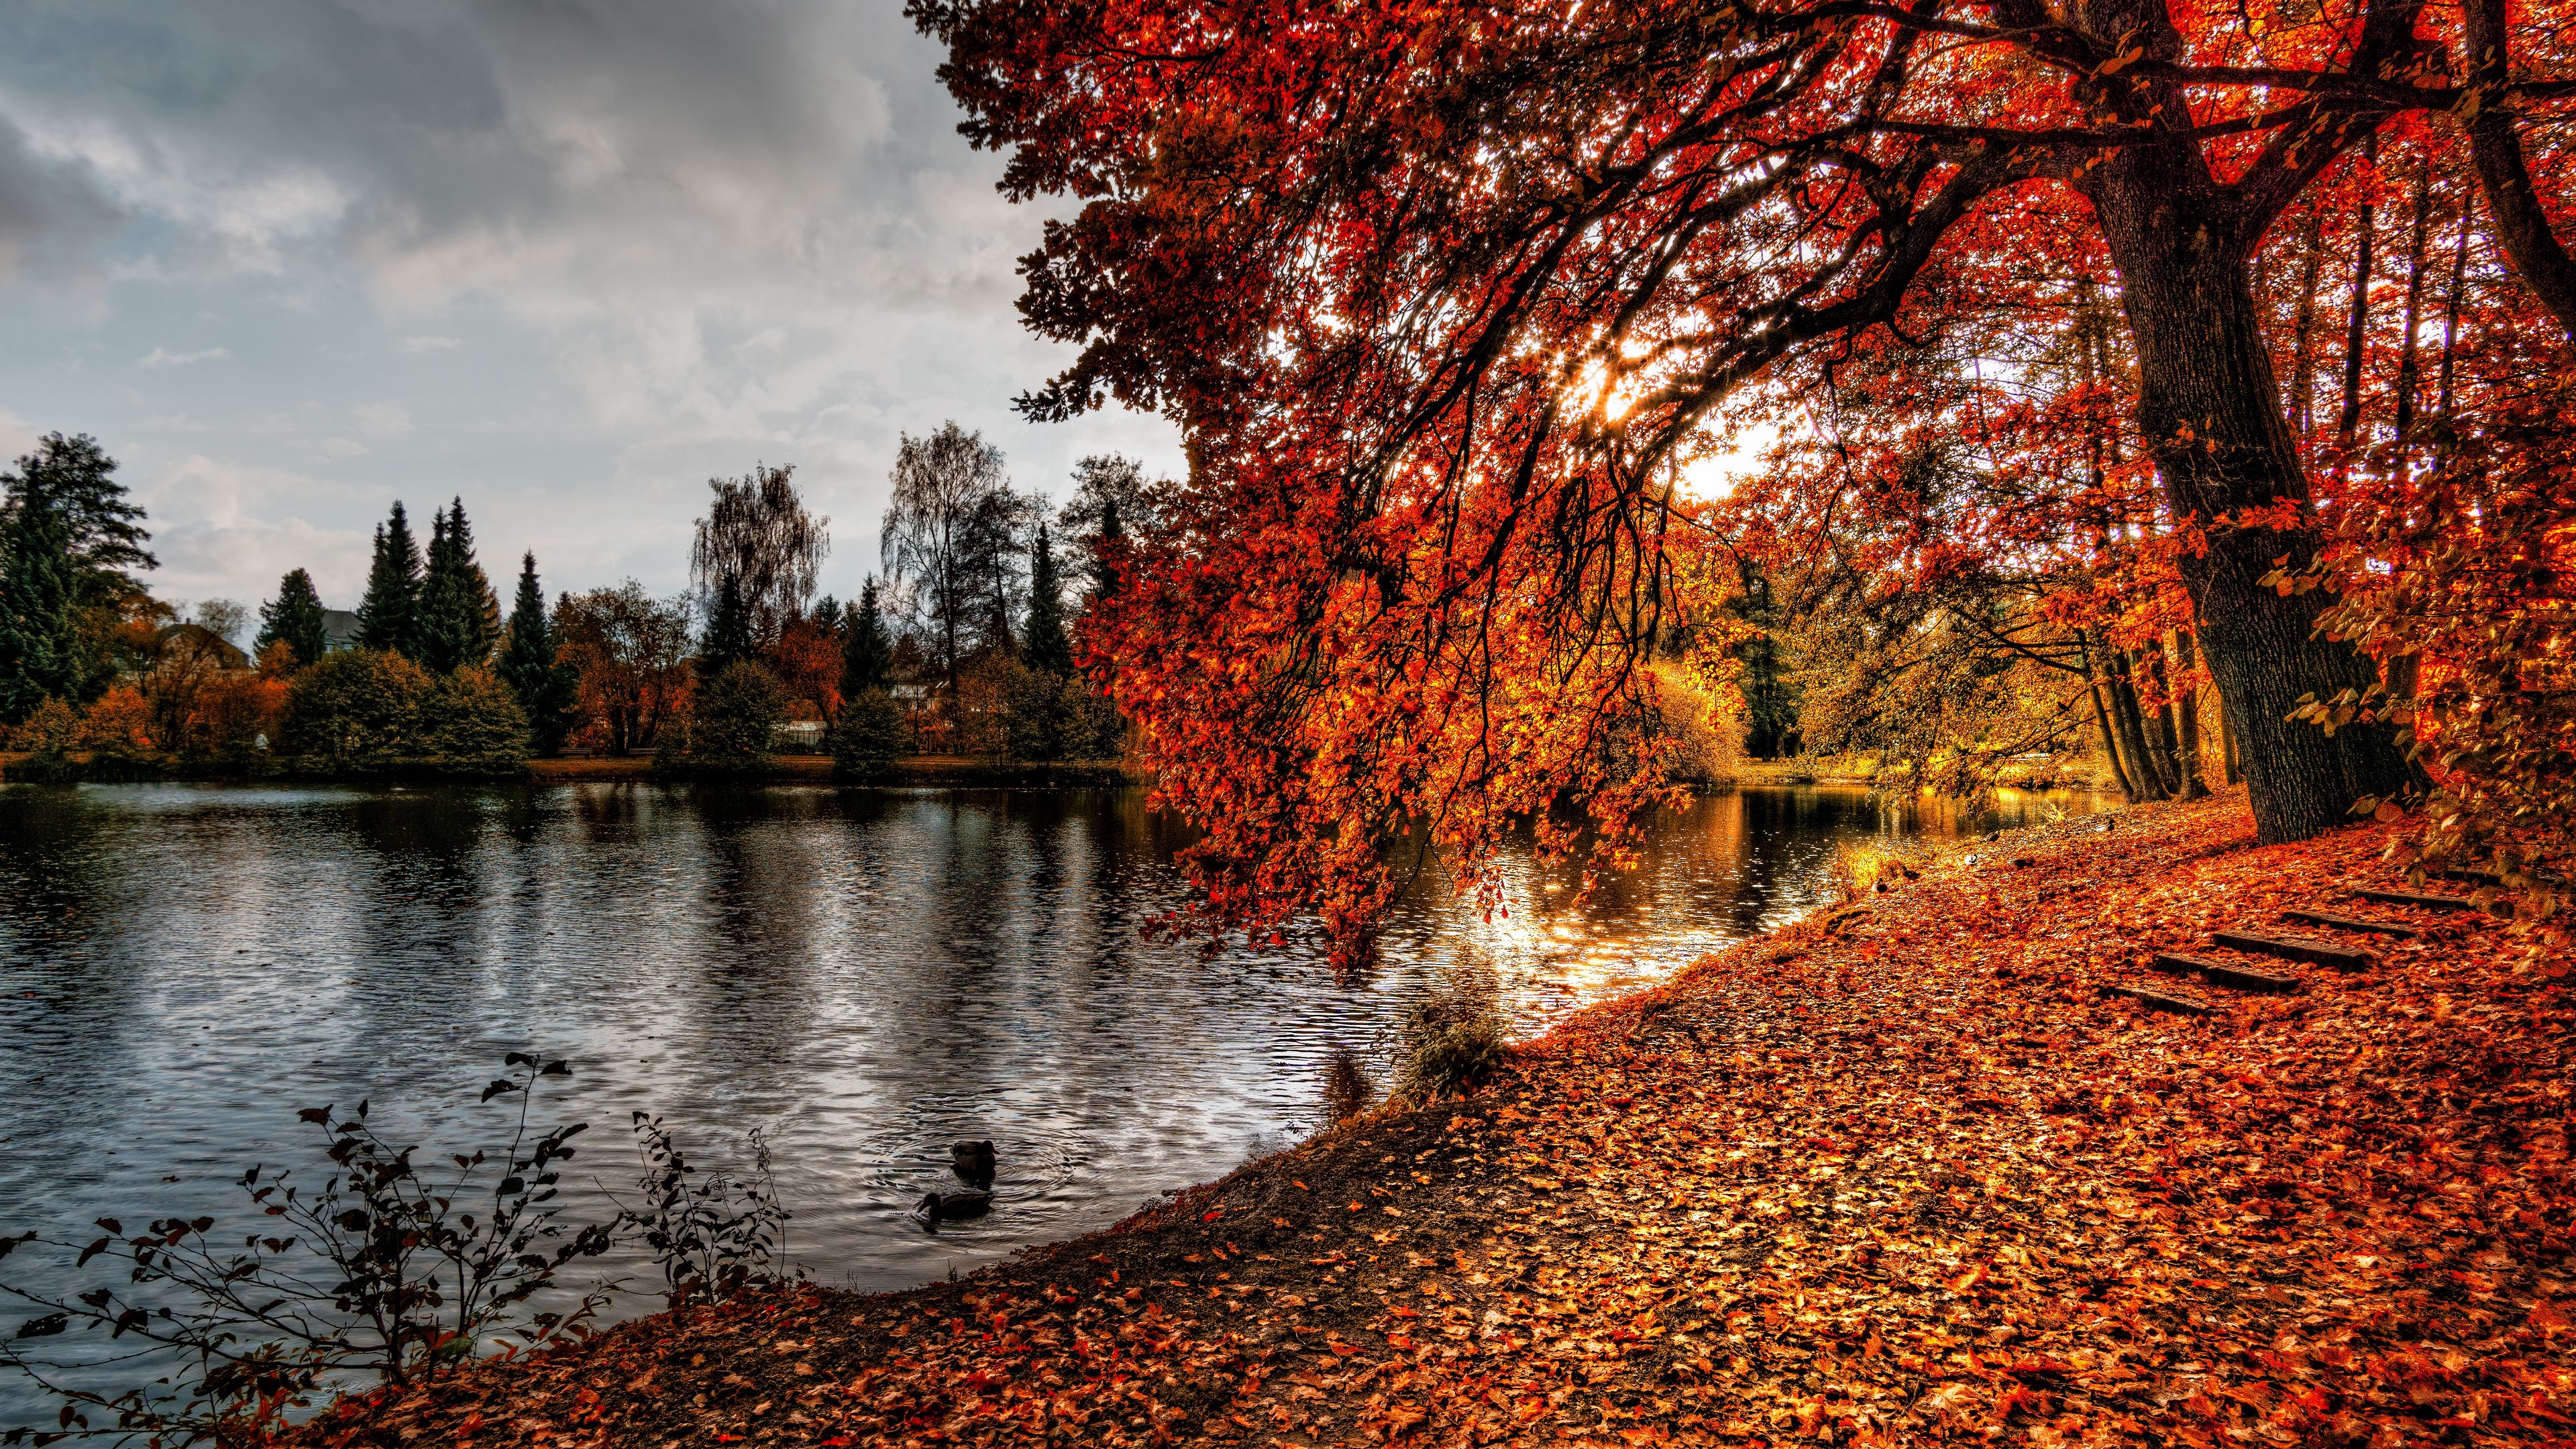 Download wallpaper 3840x2160 autumn, park, foliage, lake 4k uhd 16:9 HD background